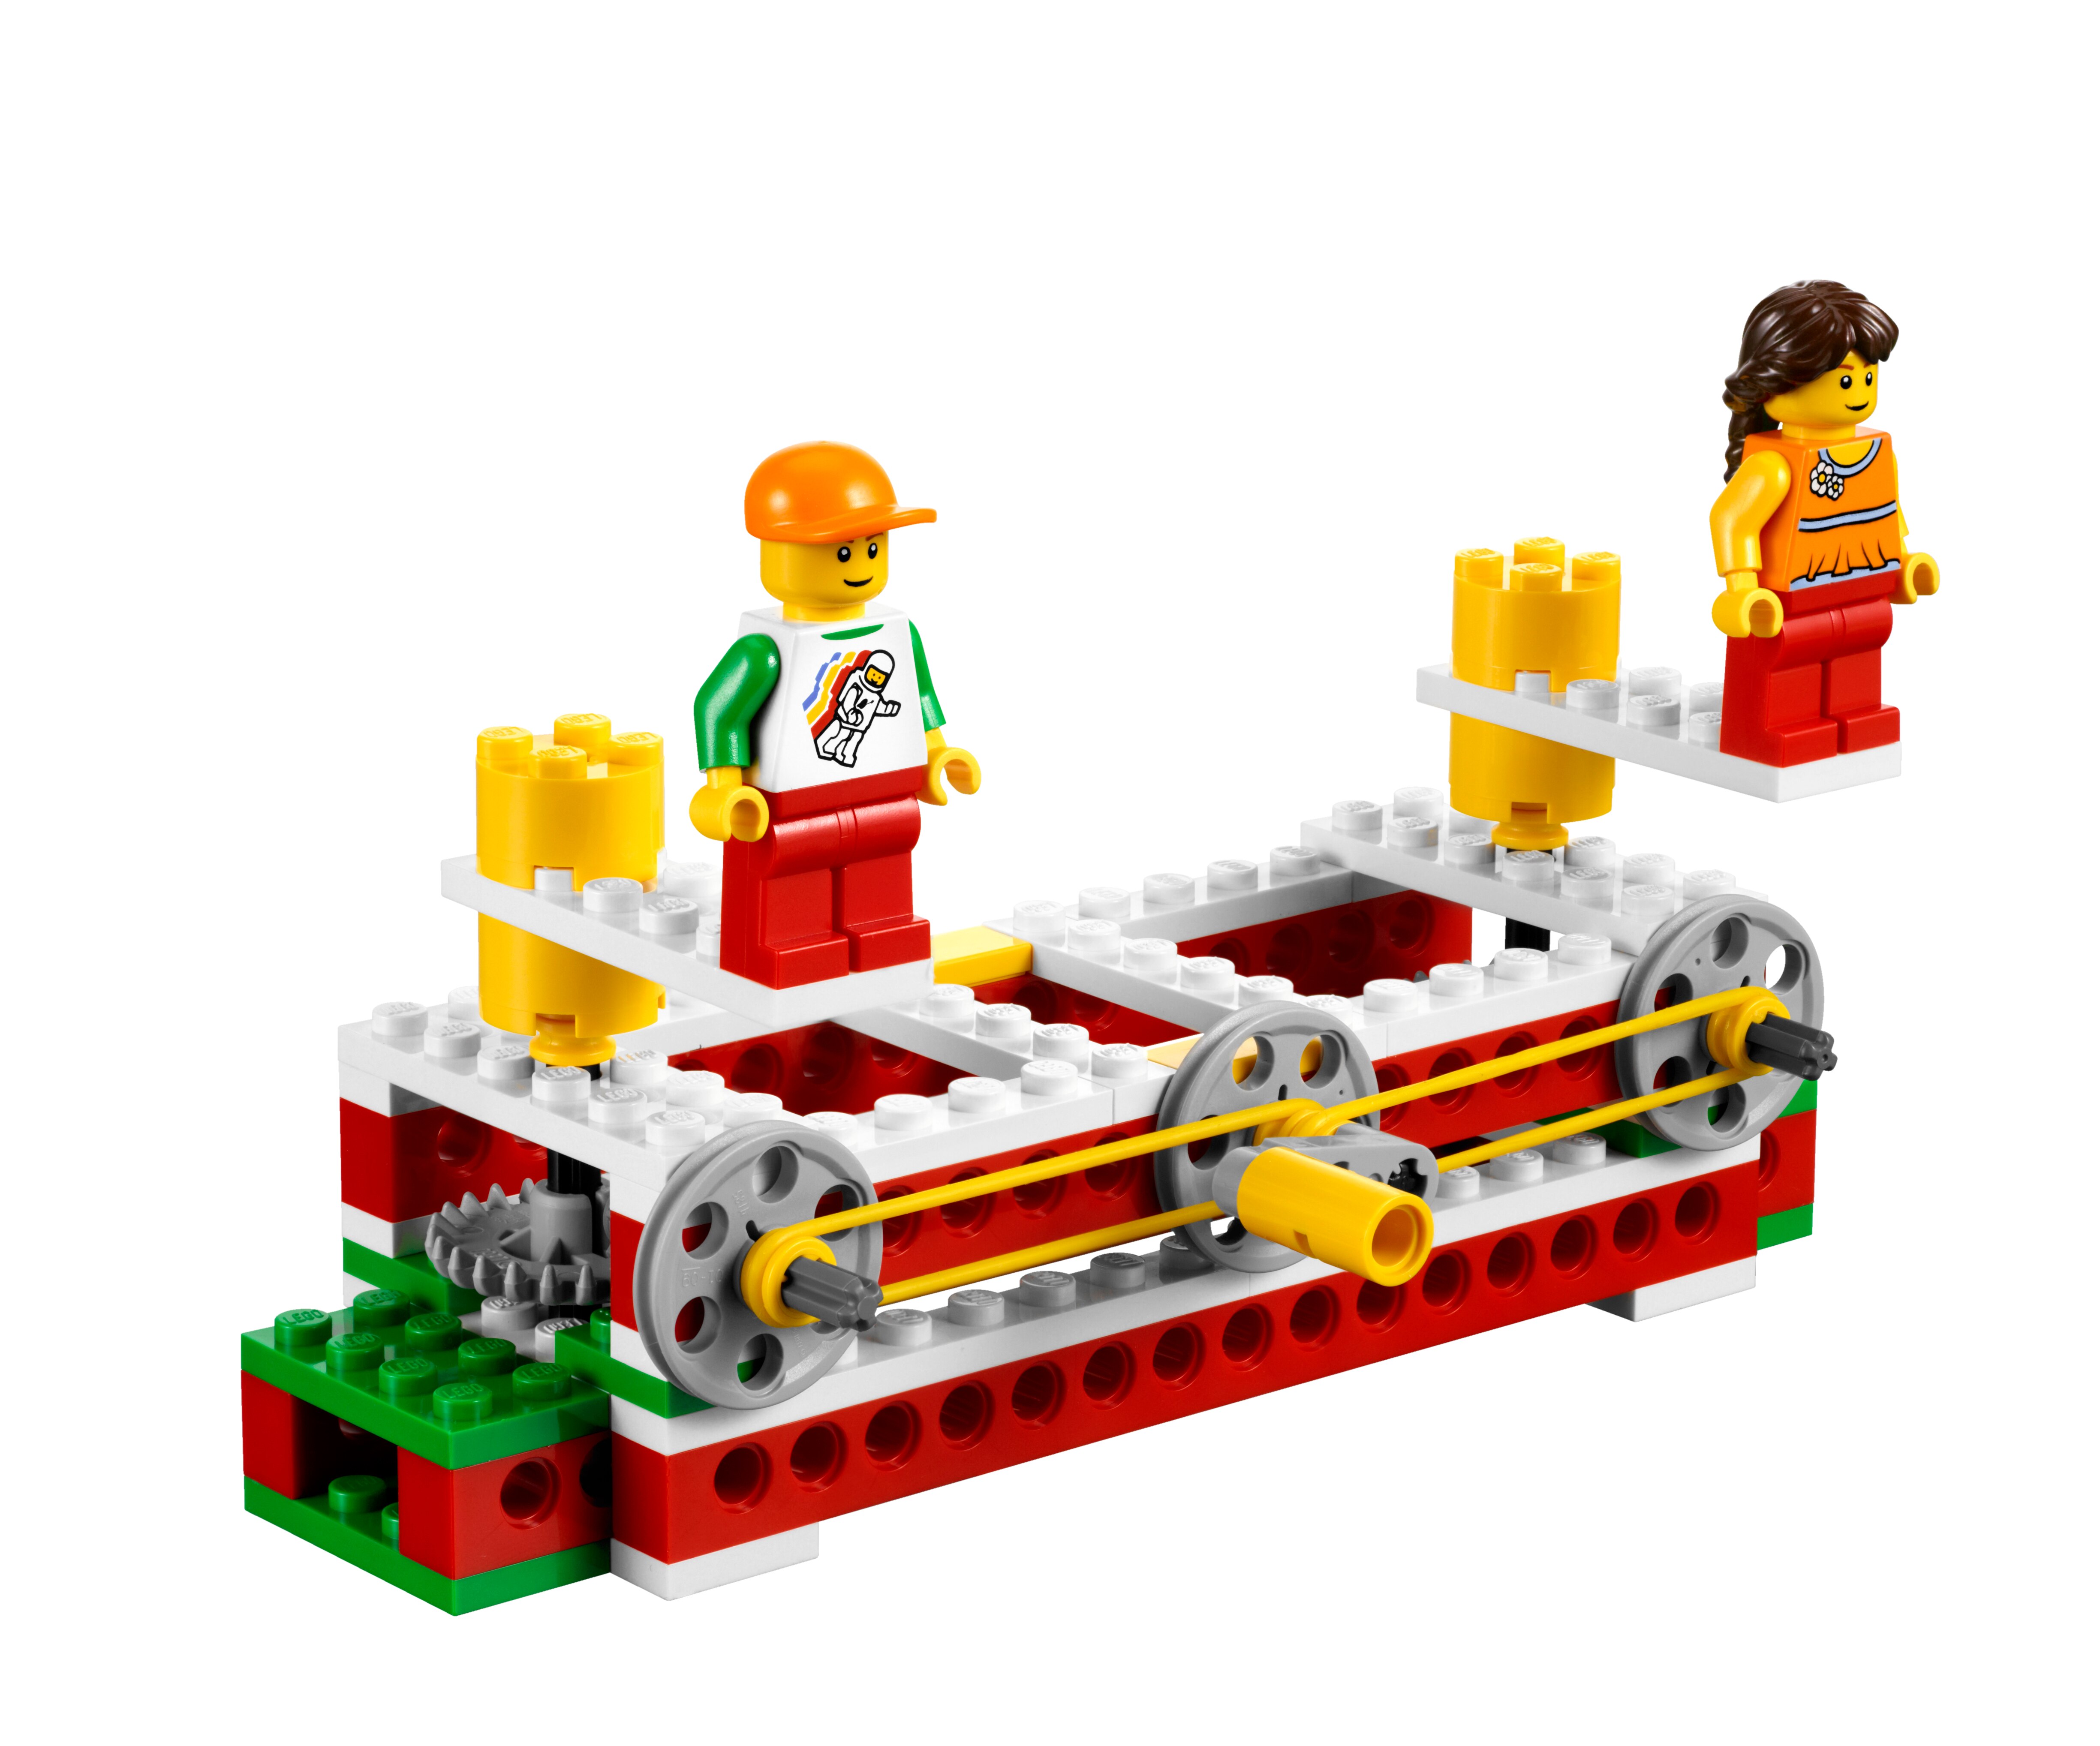 Resultado de imagen de LEGO COMPLEX machines for kids